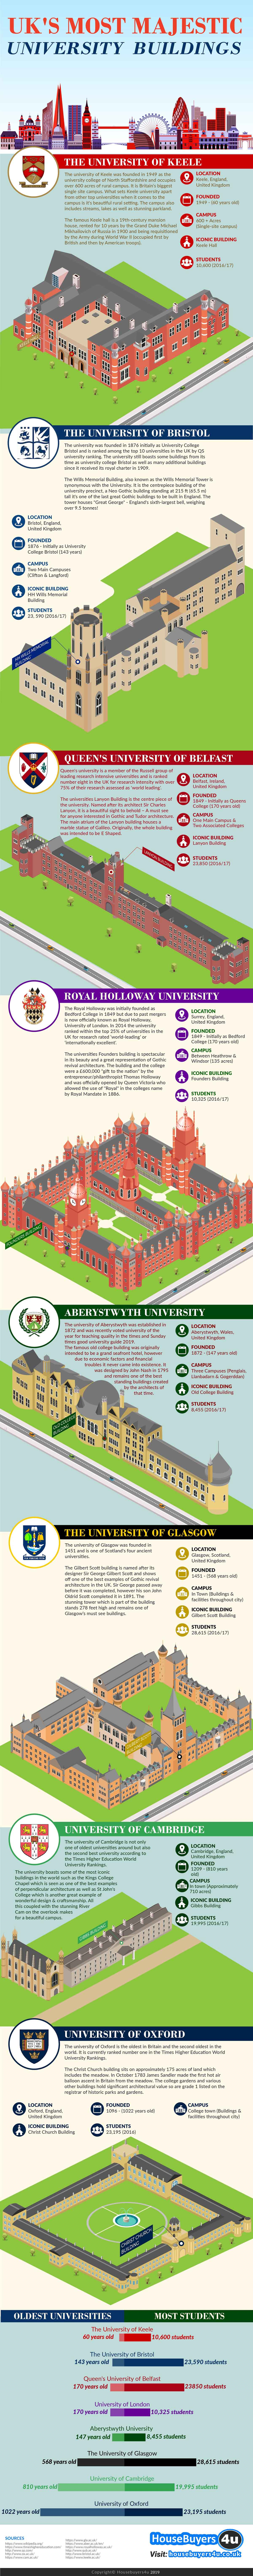 UK's Most Majestic University Buildings